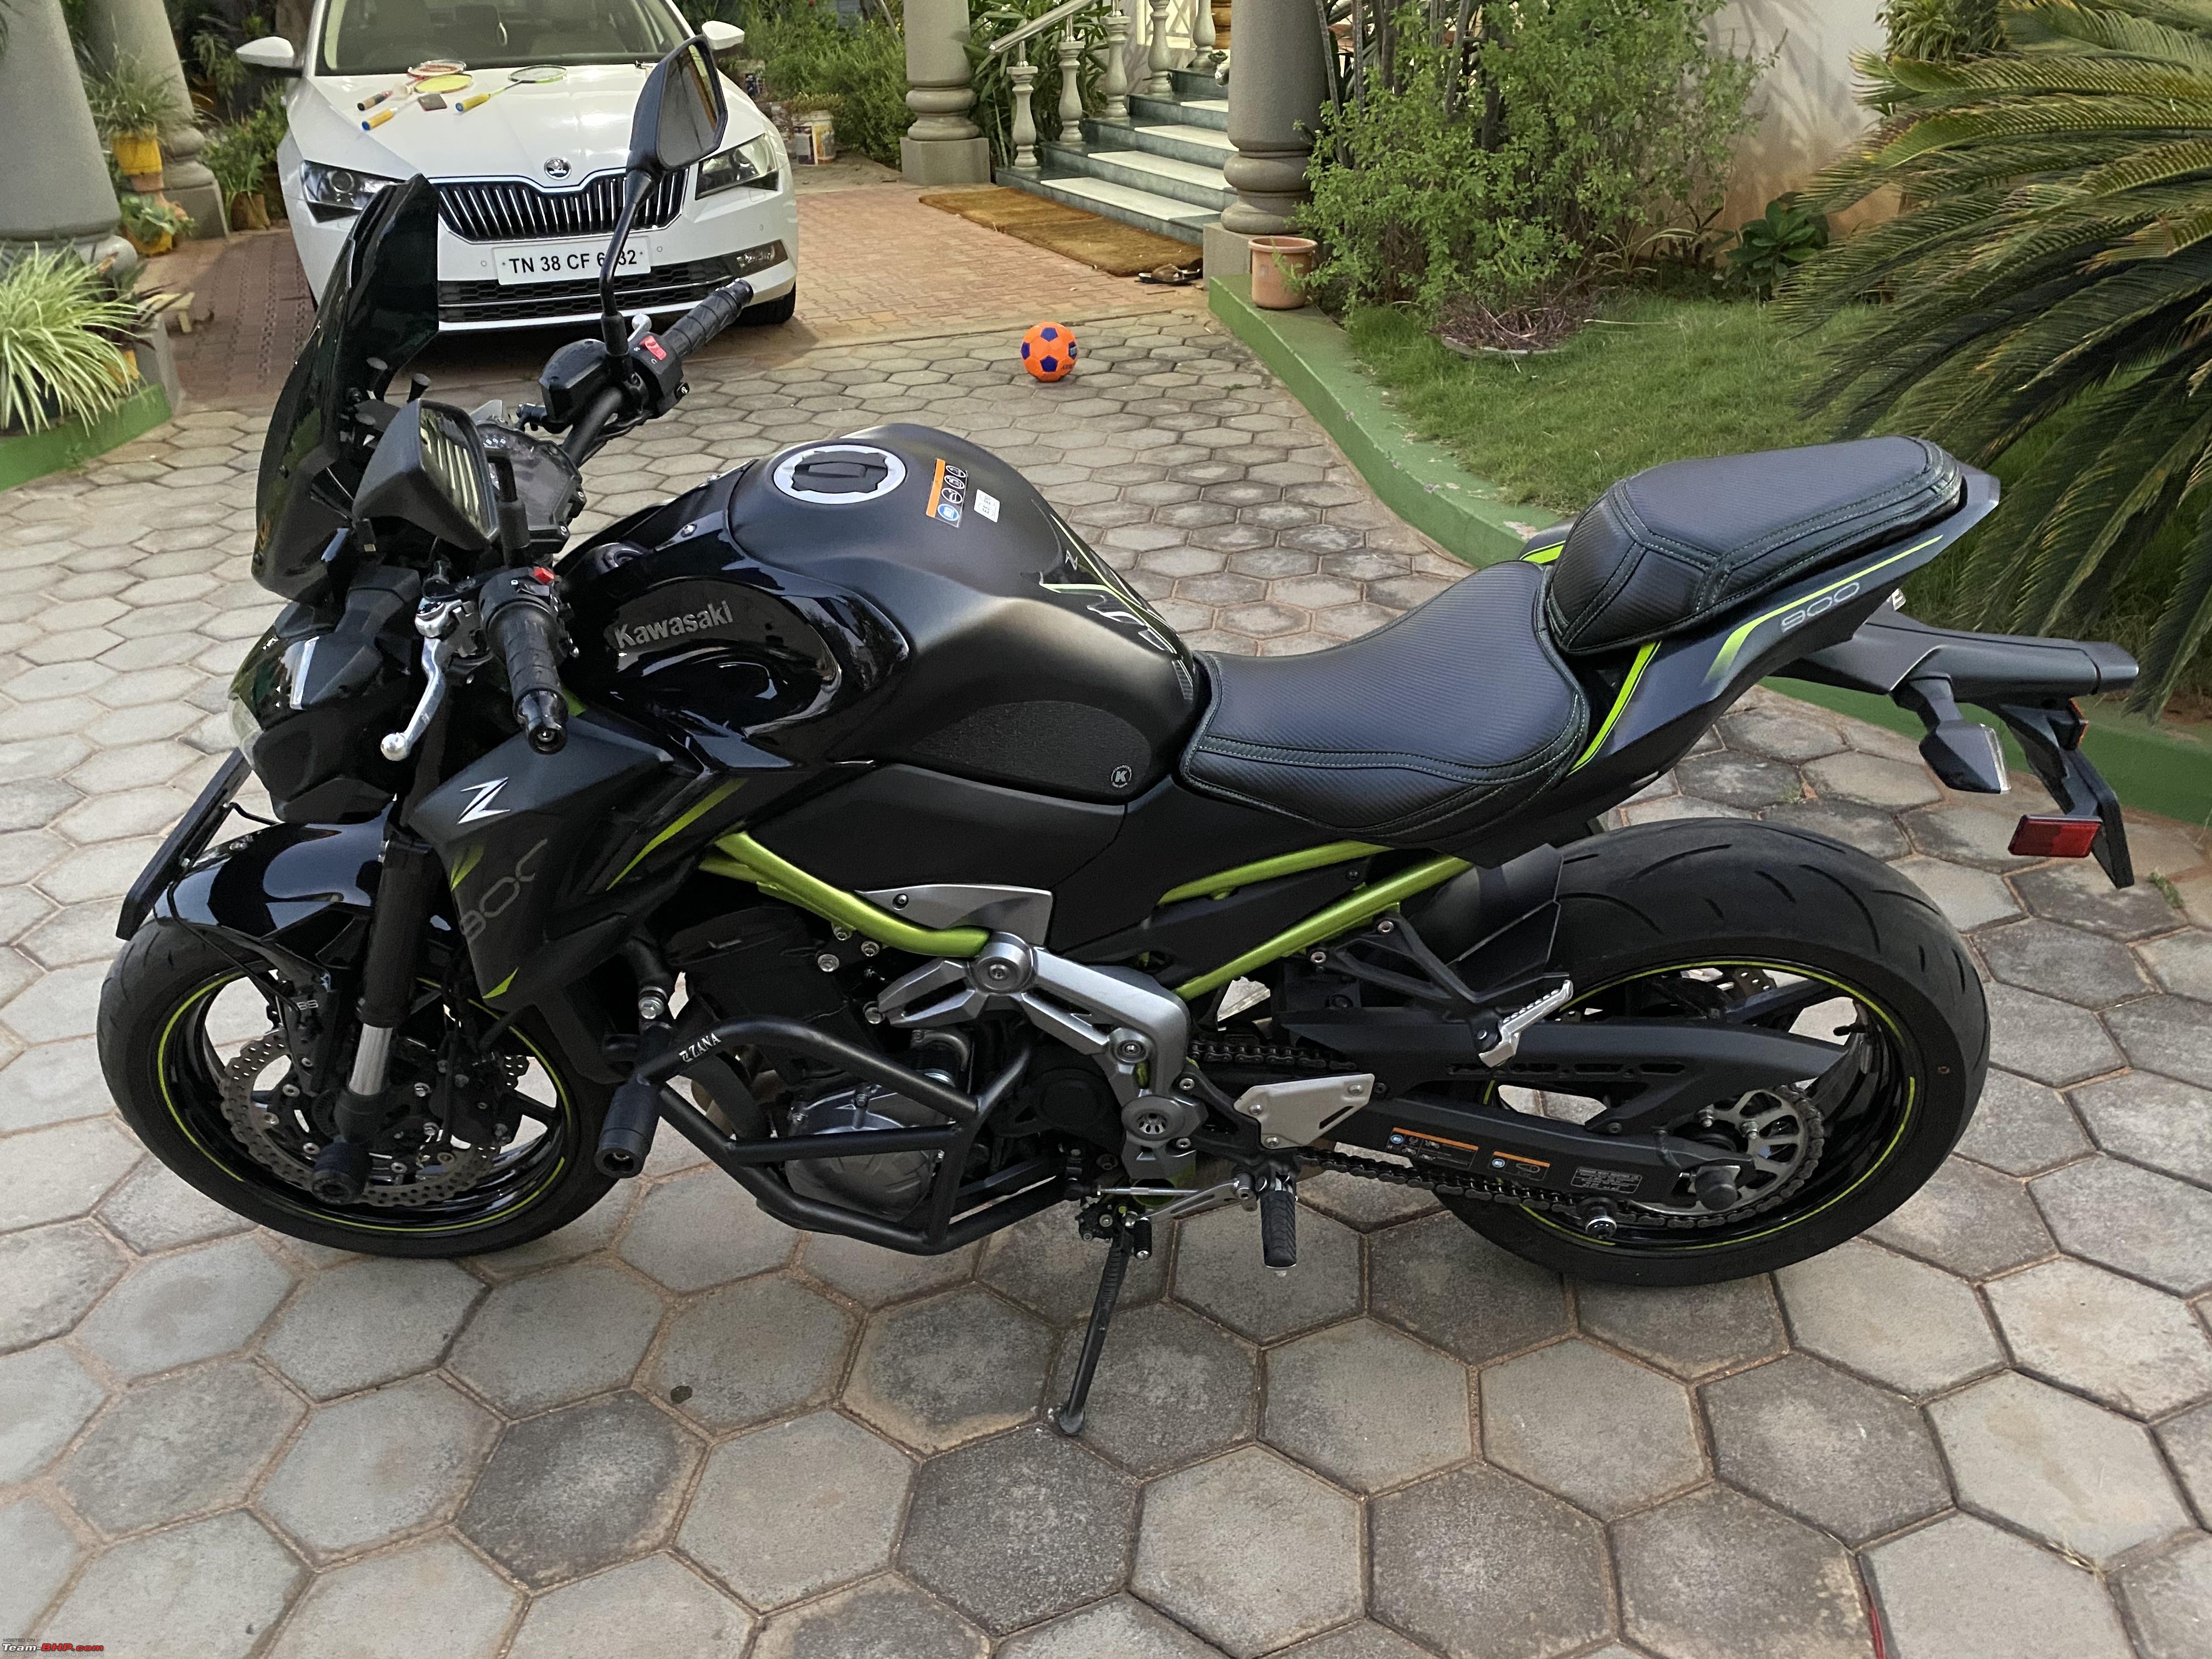 The Kawasaki Z900 comes home : My Black Hornet - Team-BHP